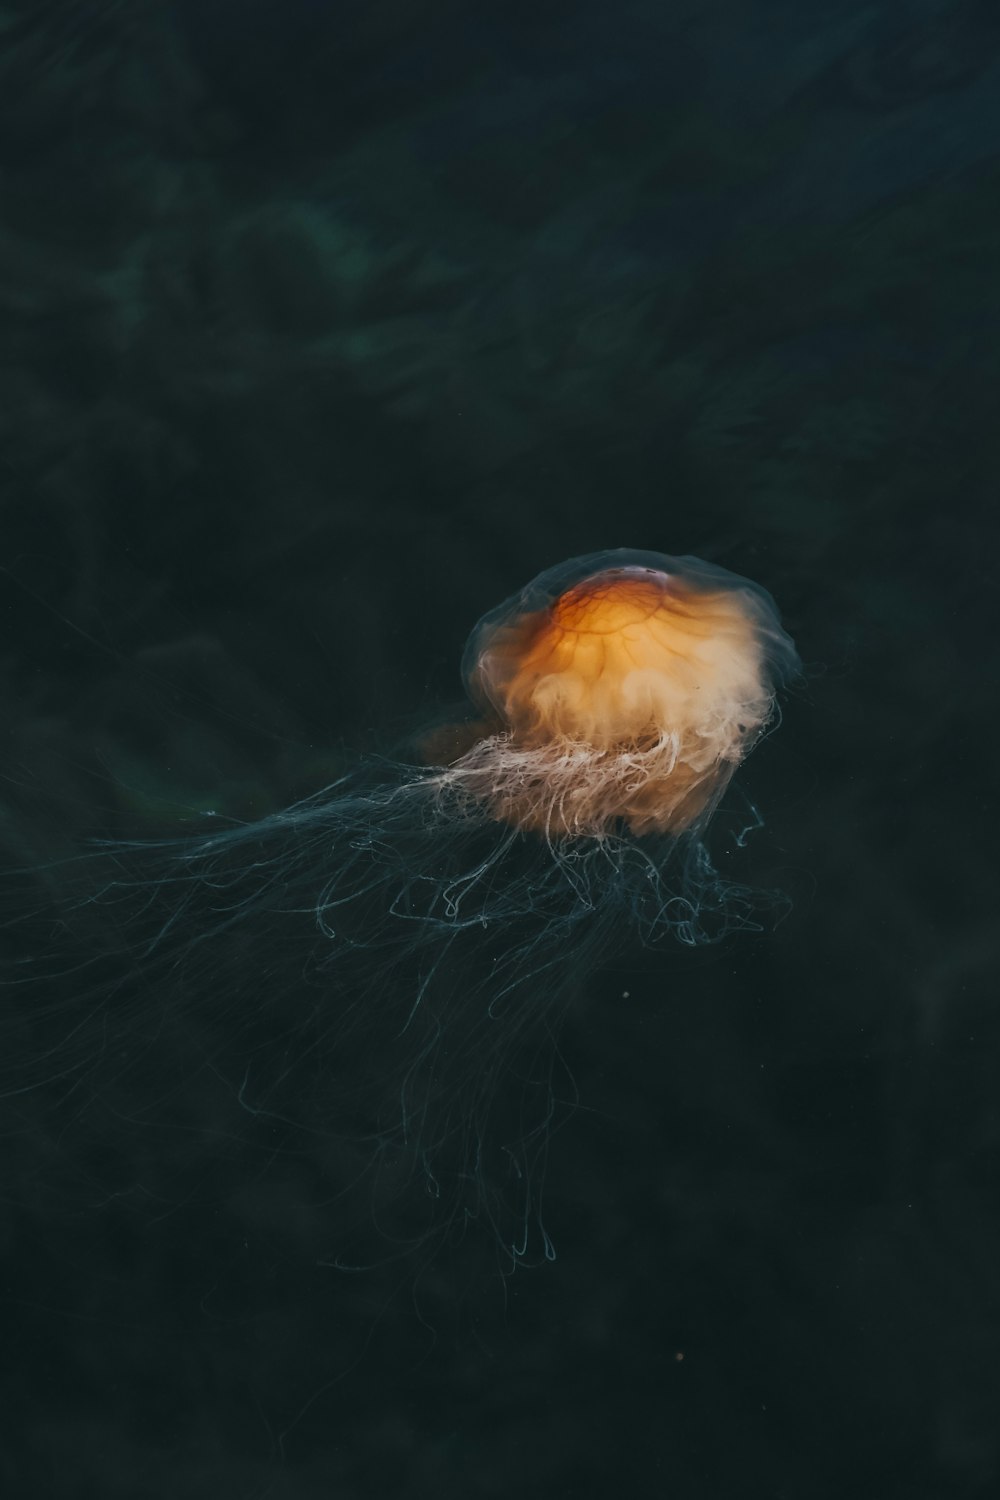 orange and white jellyfish in water